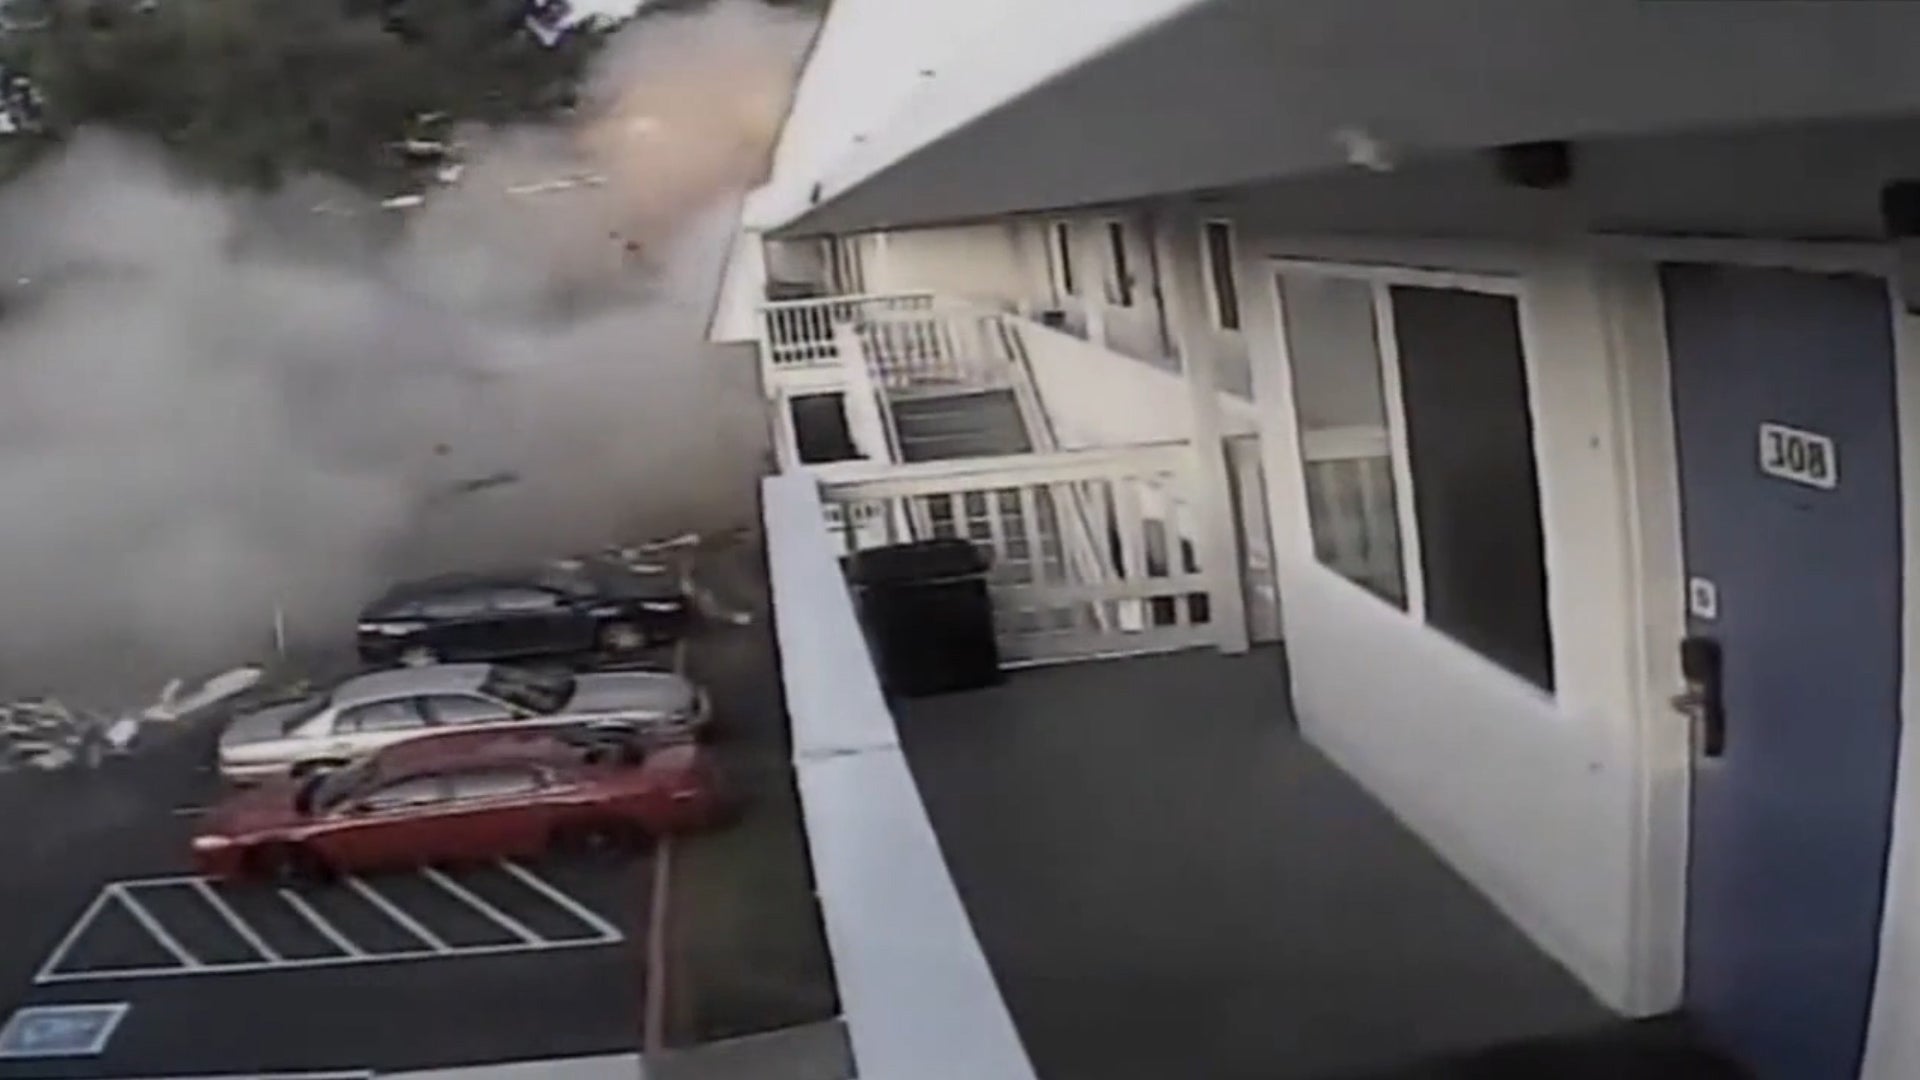 Surveillance video captures gas leak explosion at Washington motel